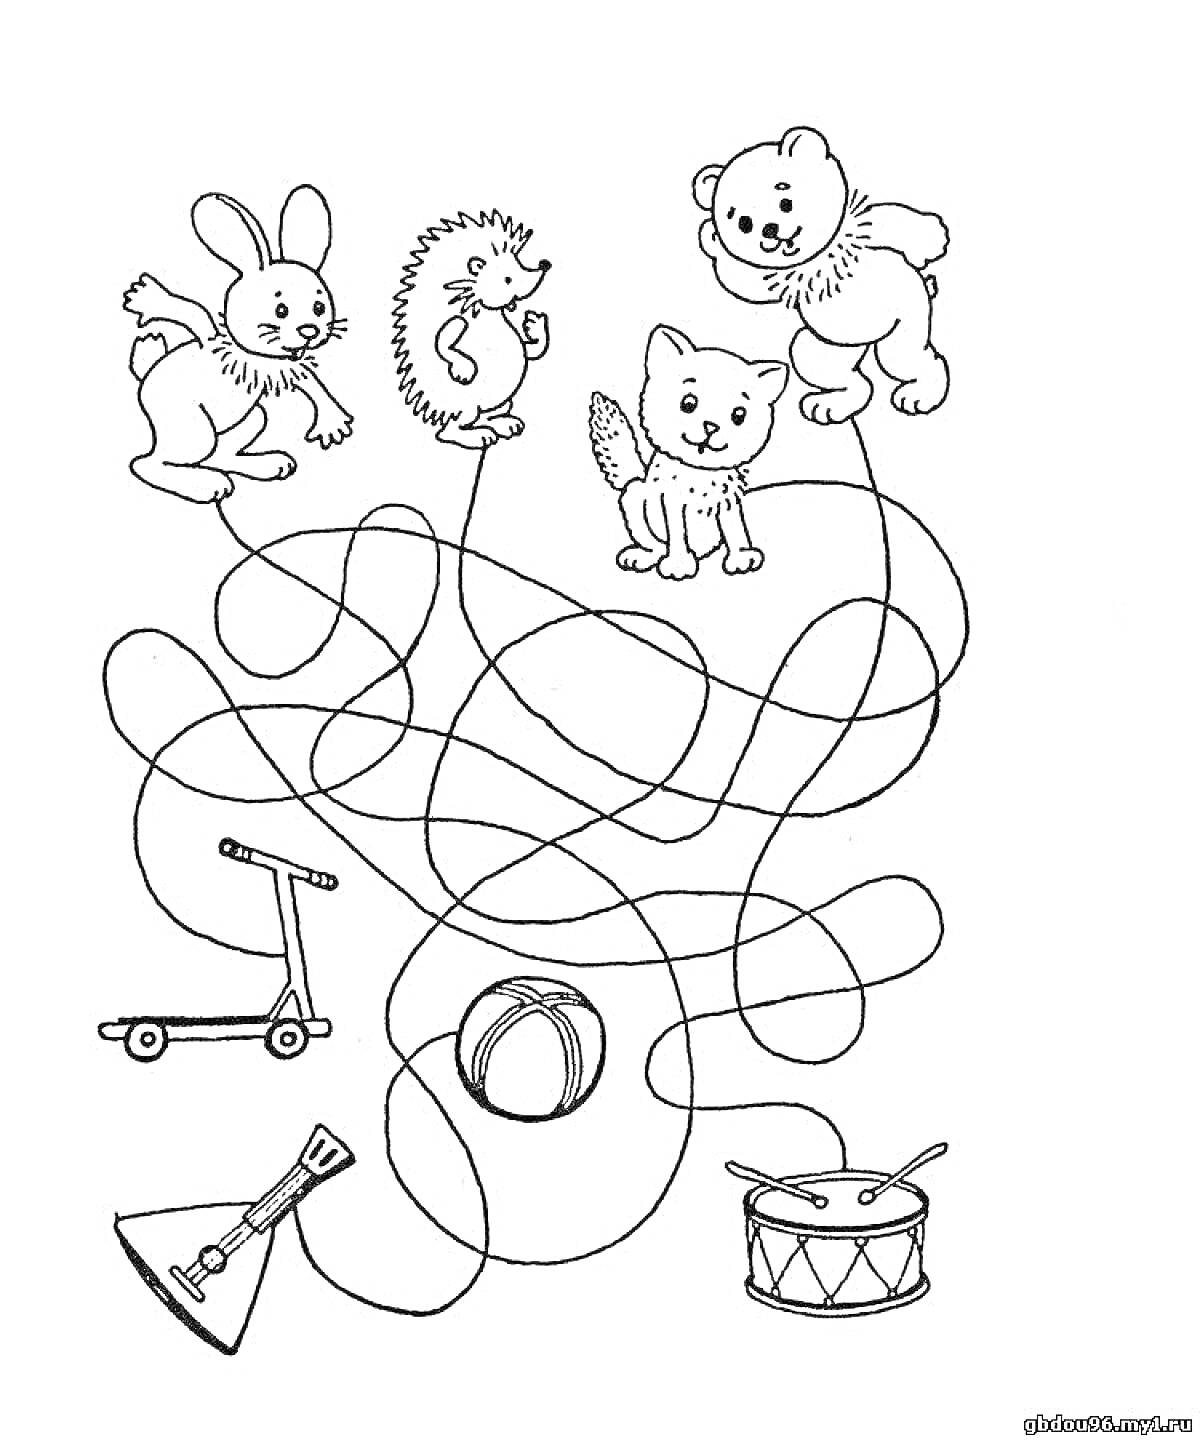 На раскраске изображено: Игра, Заяц, Медведь, Кот, Самокат, Юла, Барабан, Лабиринт, Для детей, Еж, Мячи